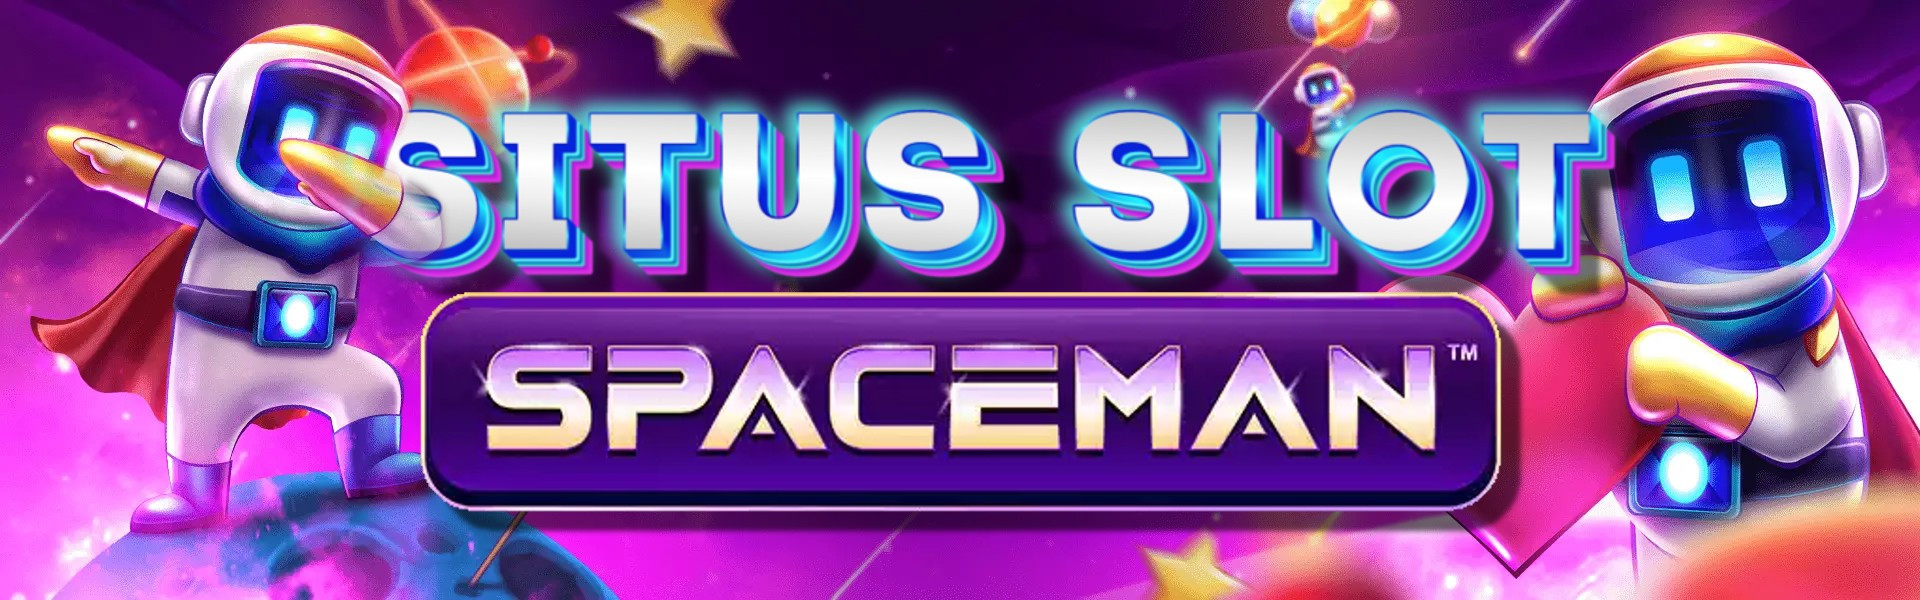 SPACEMAN > Daftar Situs Spaceman Slot Pragmatic Play Deposit 10ribu Mudah x100